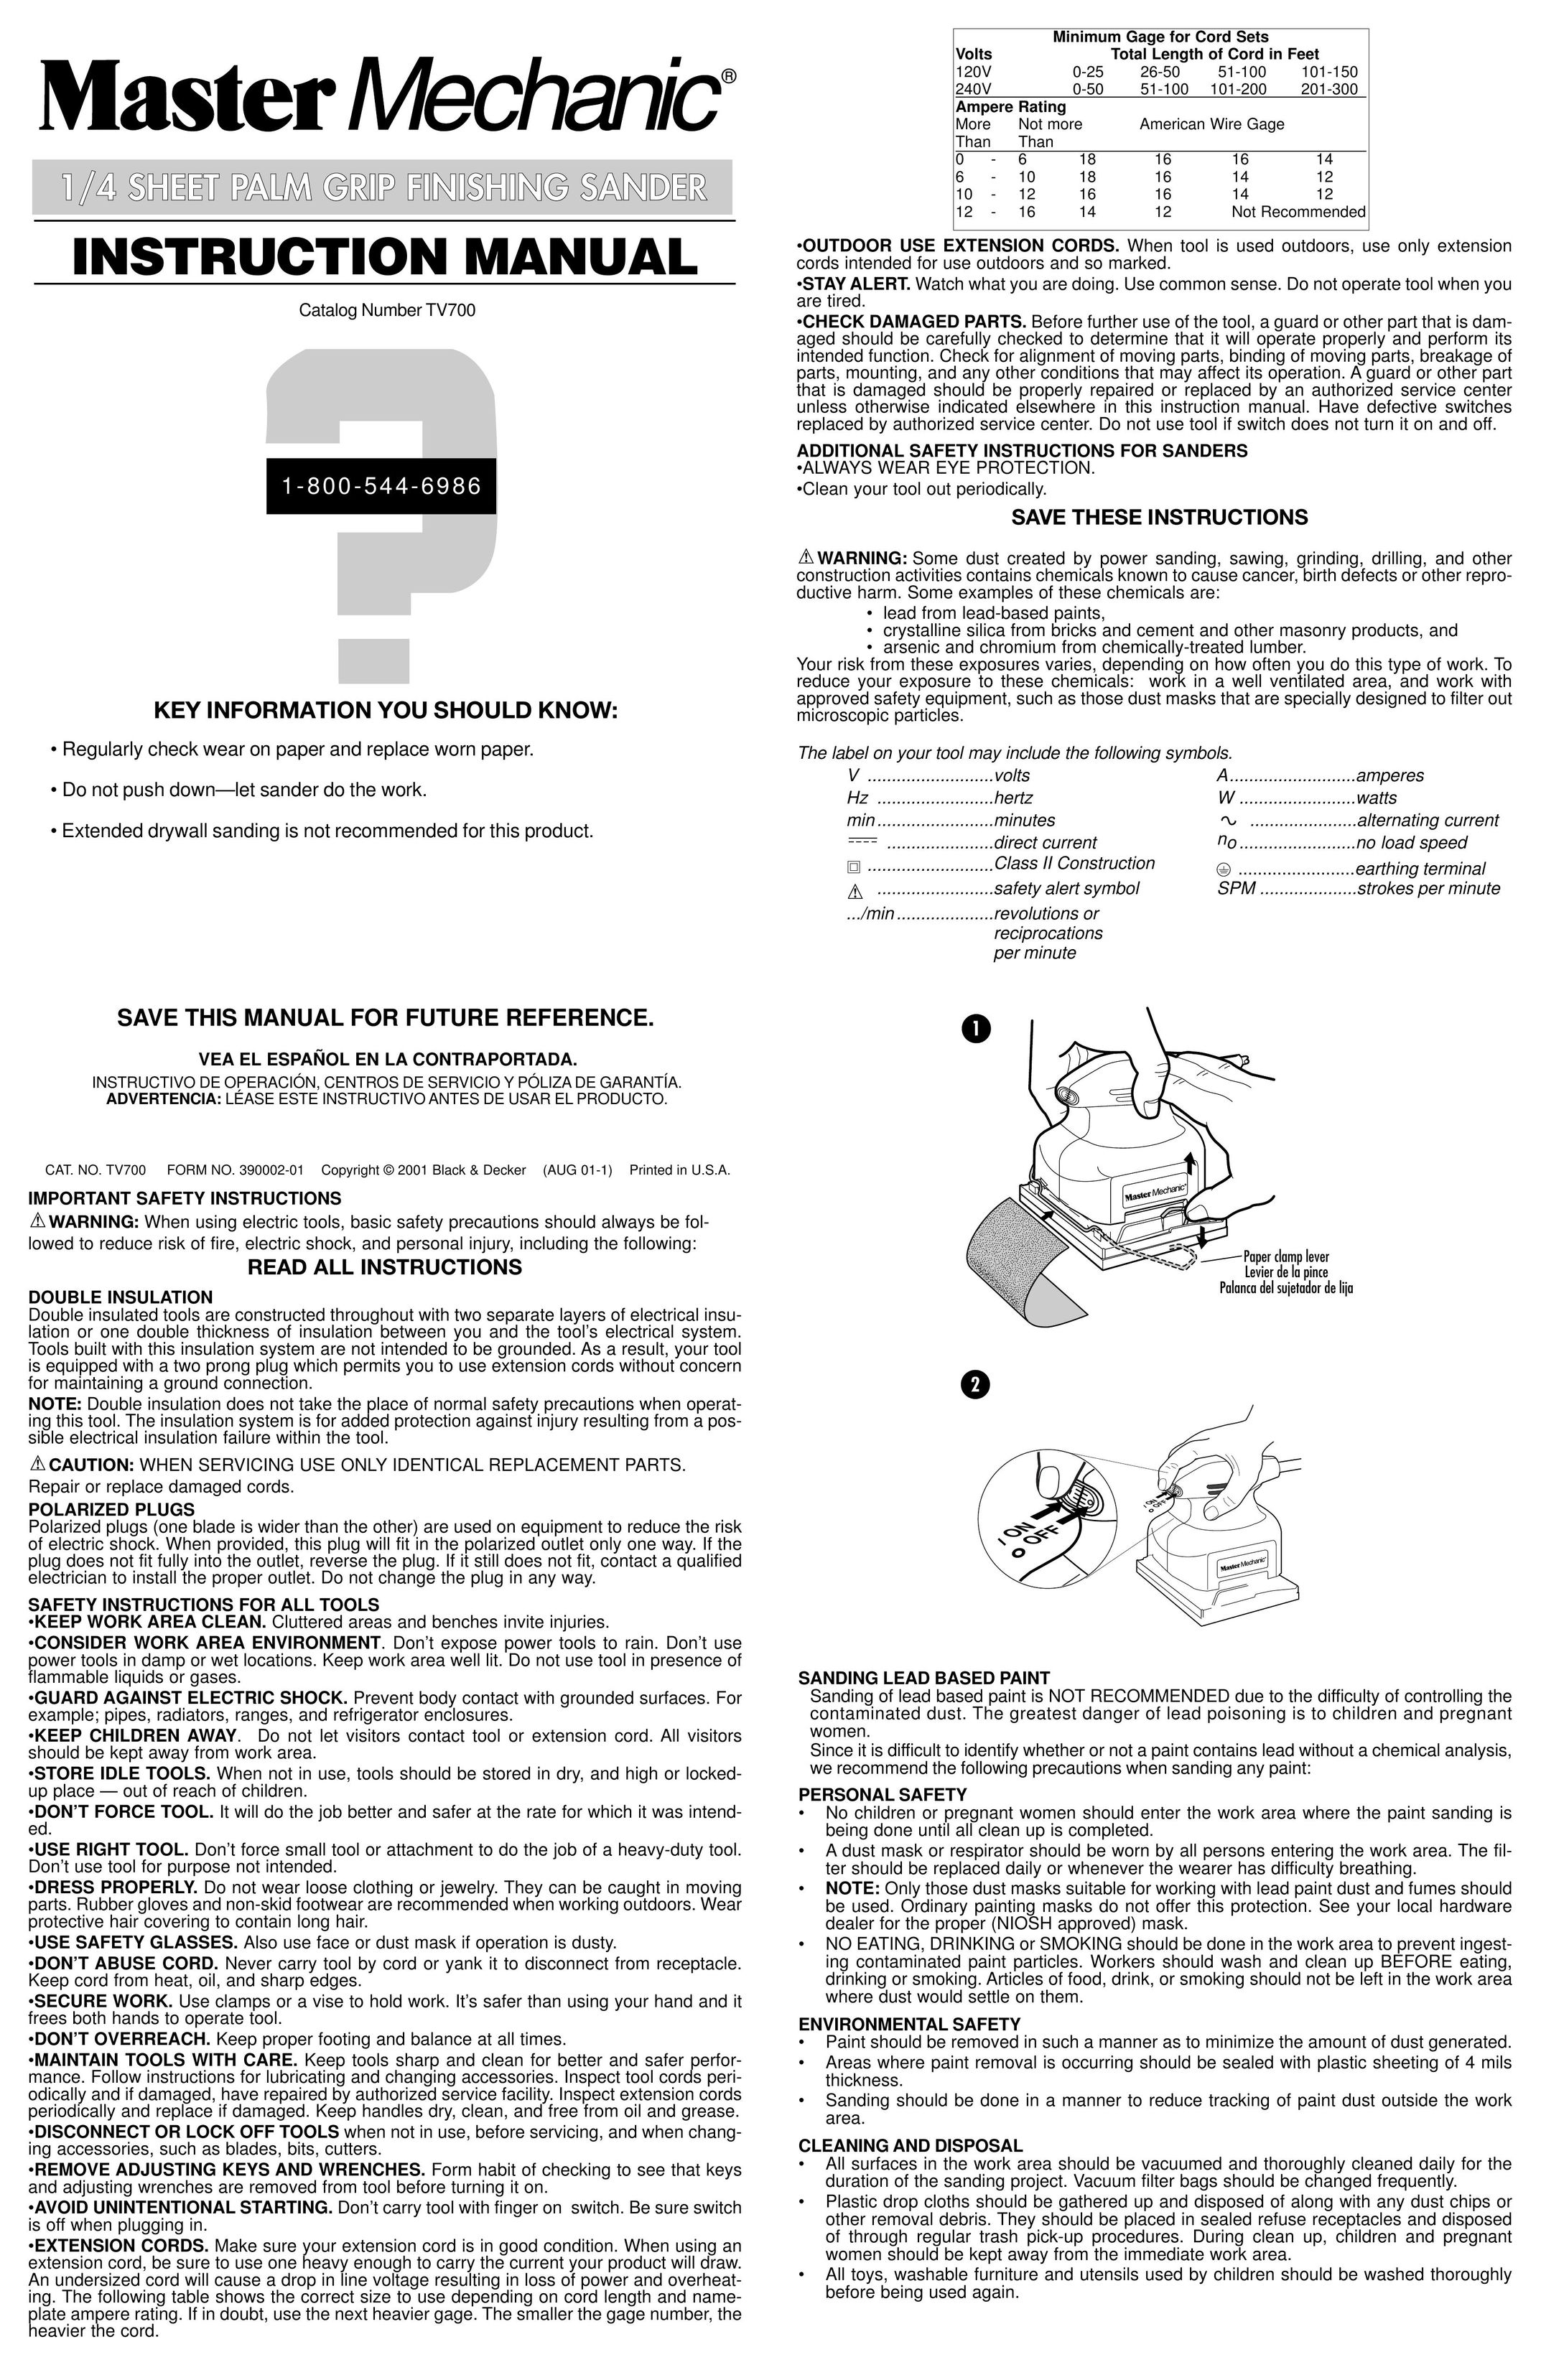 Black & Decker 390002-01 Sander User Manual